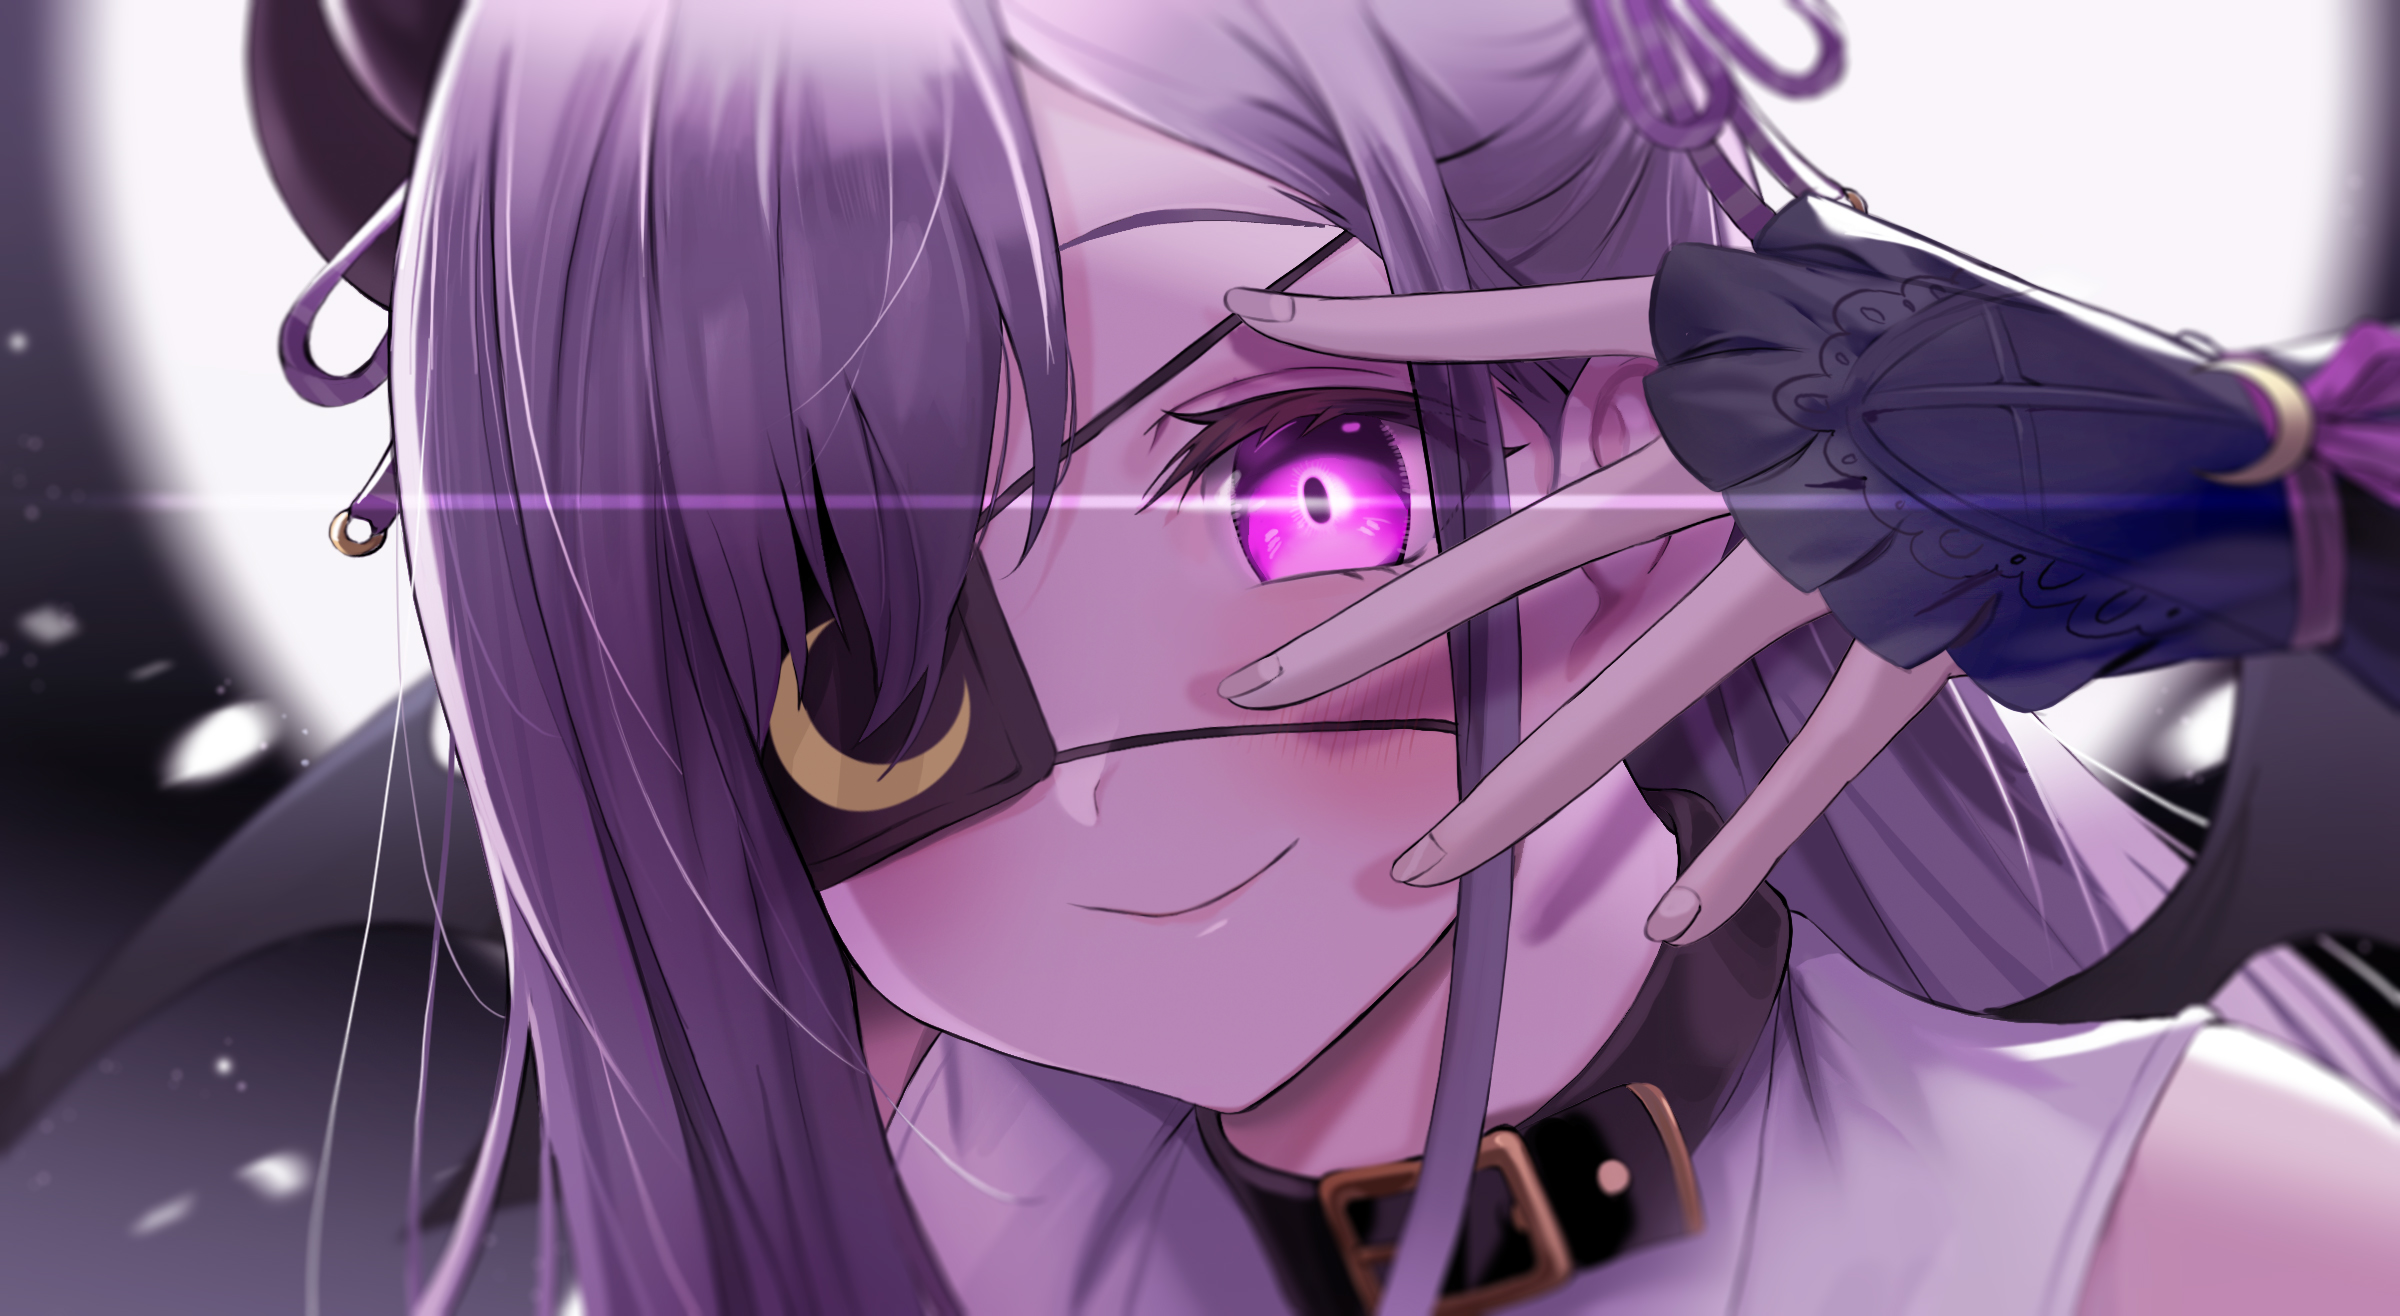 Anime 2400x1316 anime anime girls Asayuki101 artwork Virtual Youtuber purple hair purple eyes eyepatches smiling